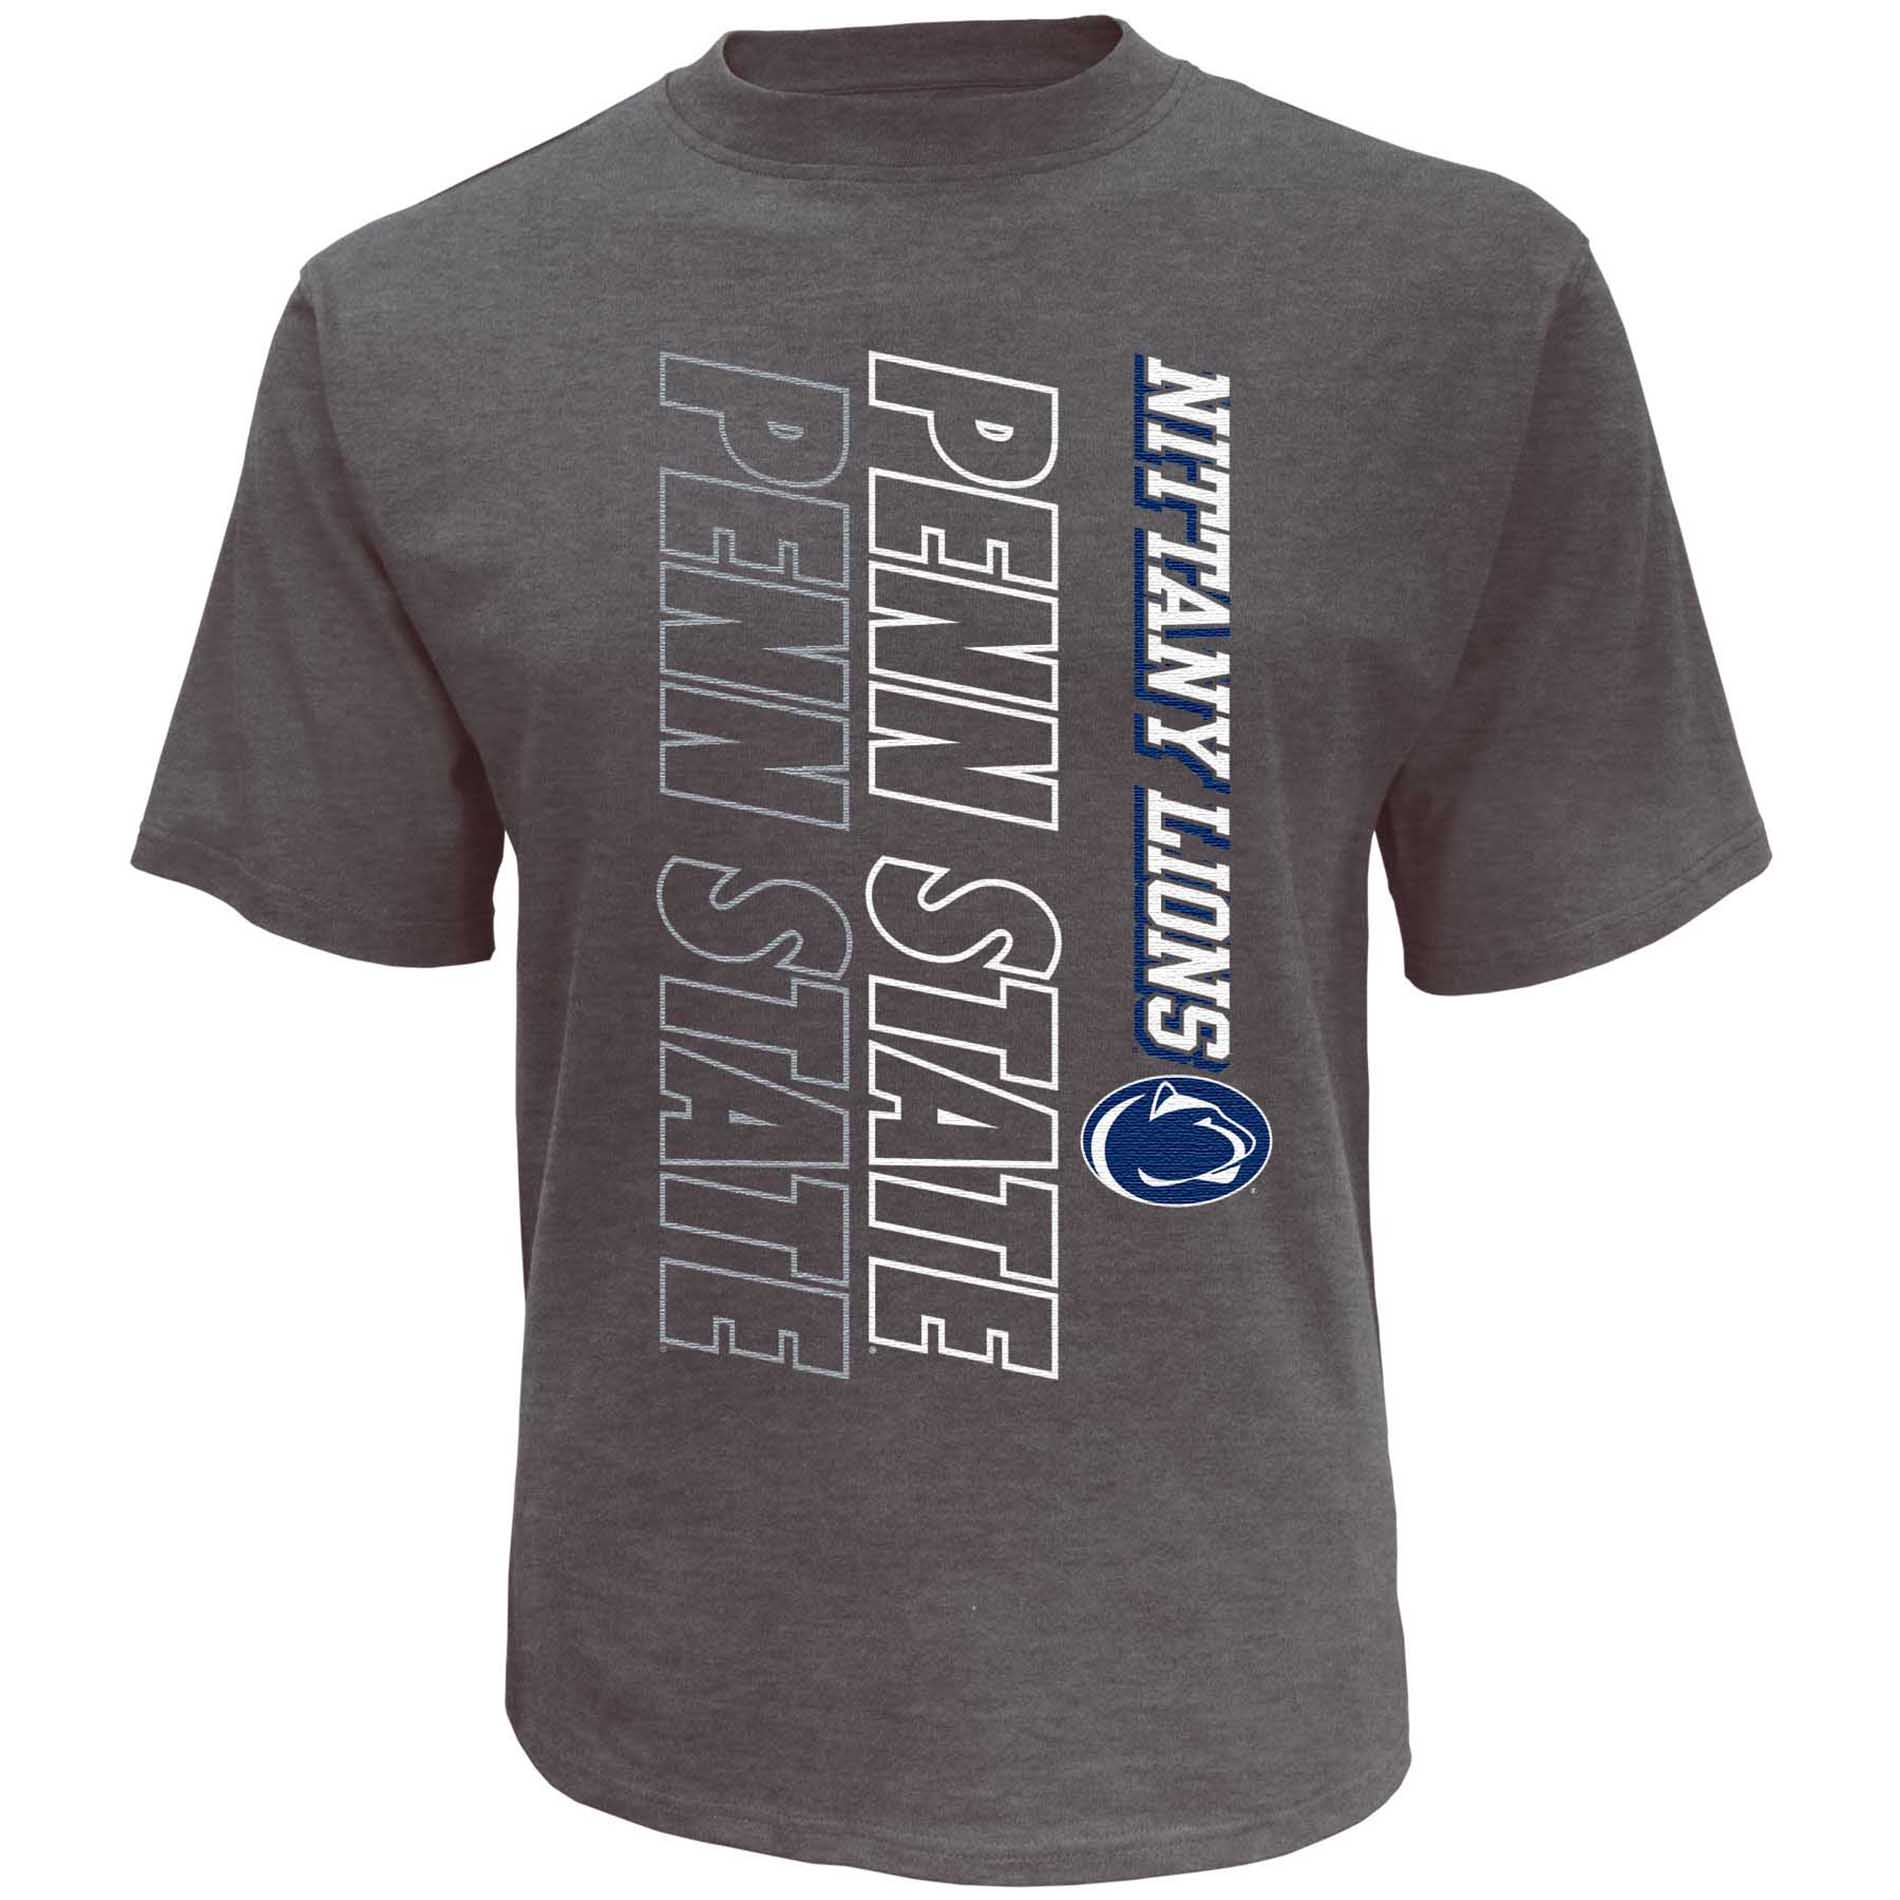 NCAA Mens' Penn State Nittany Lions Short Sleeve Print Tee